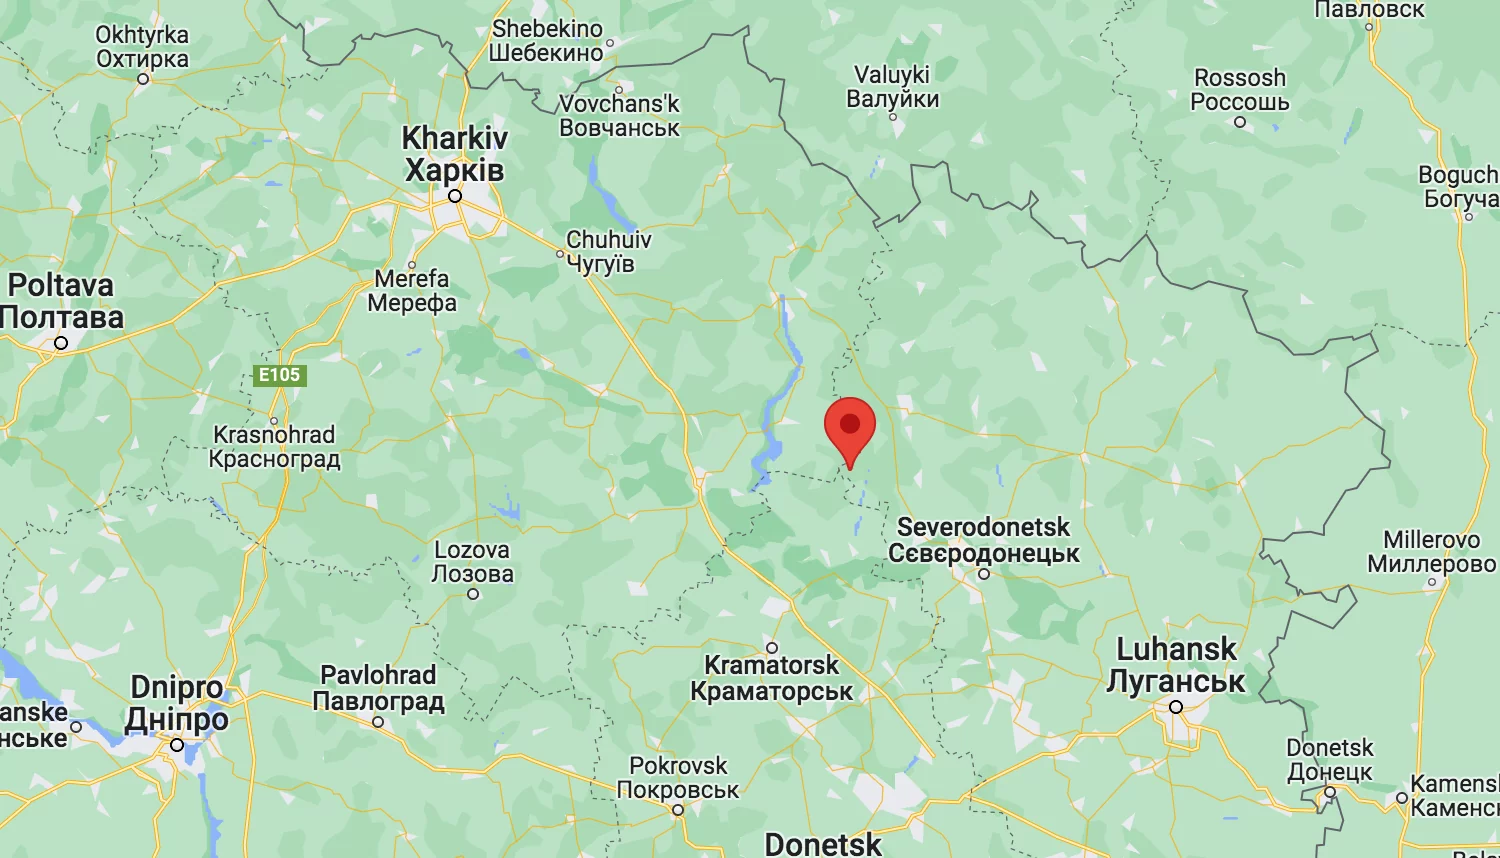 Another settlement in Luhansk Oblast de occupied – Oblast Head